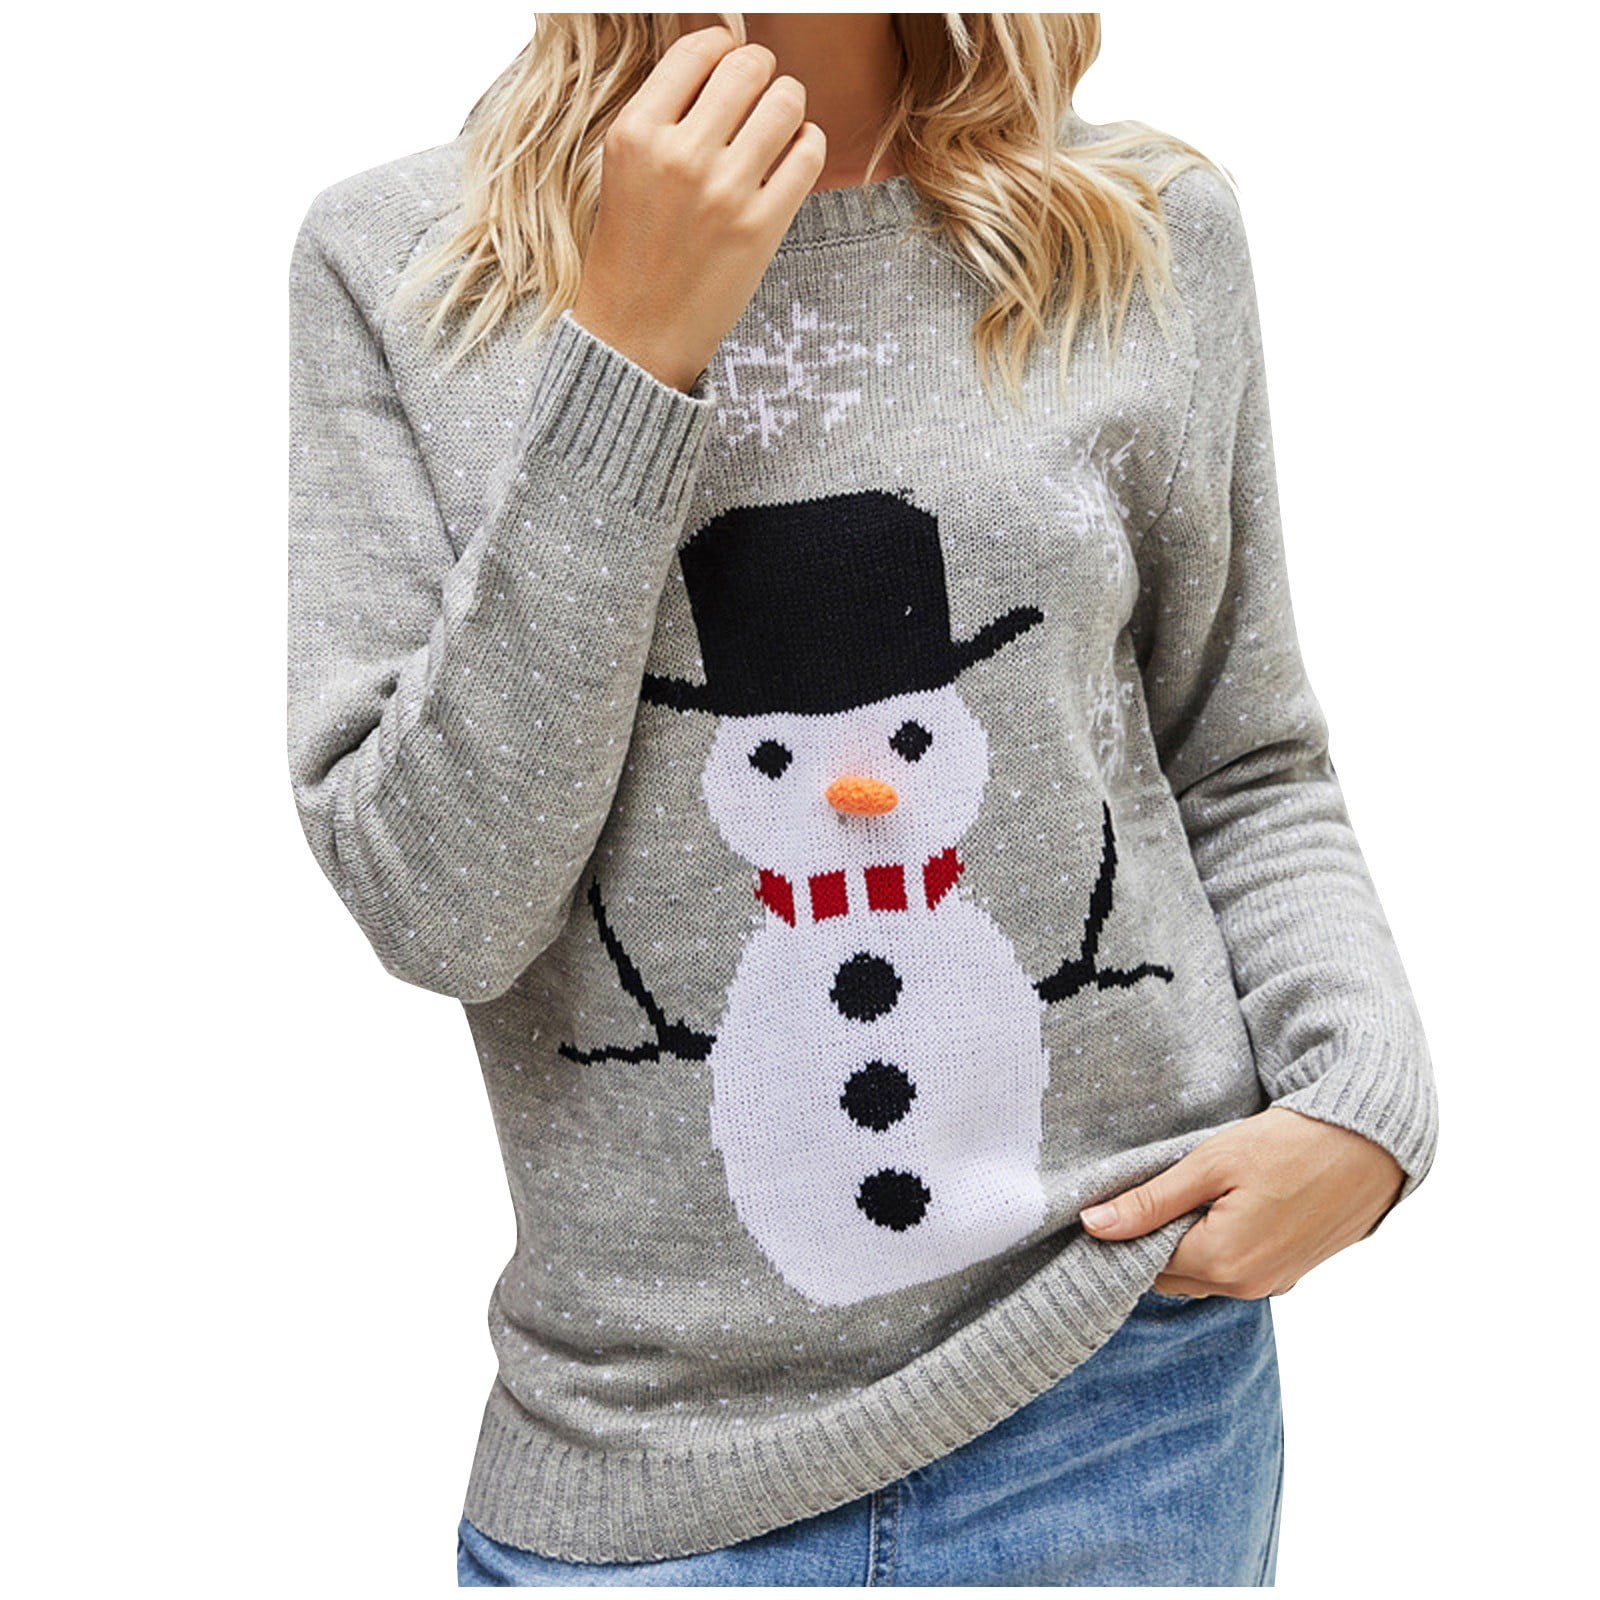 Merry Christmas 2017 Frozen Snowman Woens Hoodie Sweater